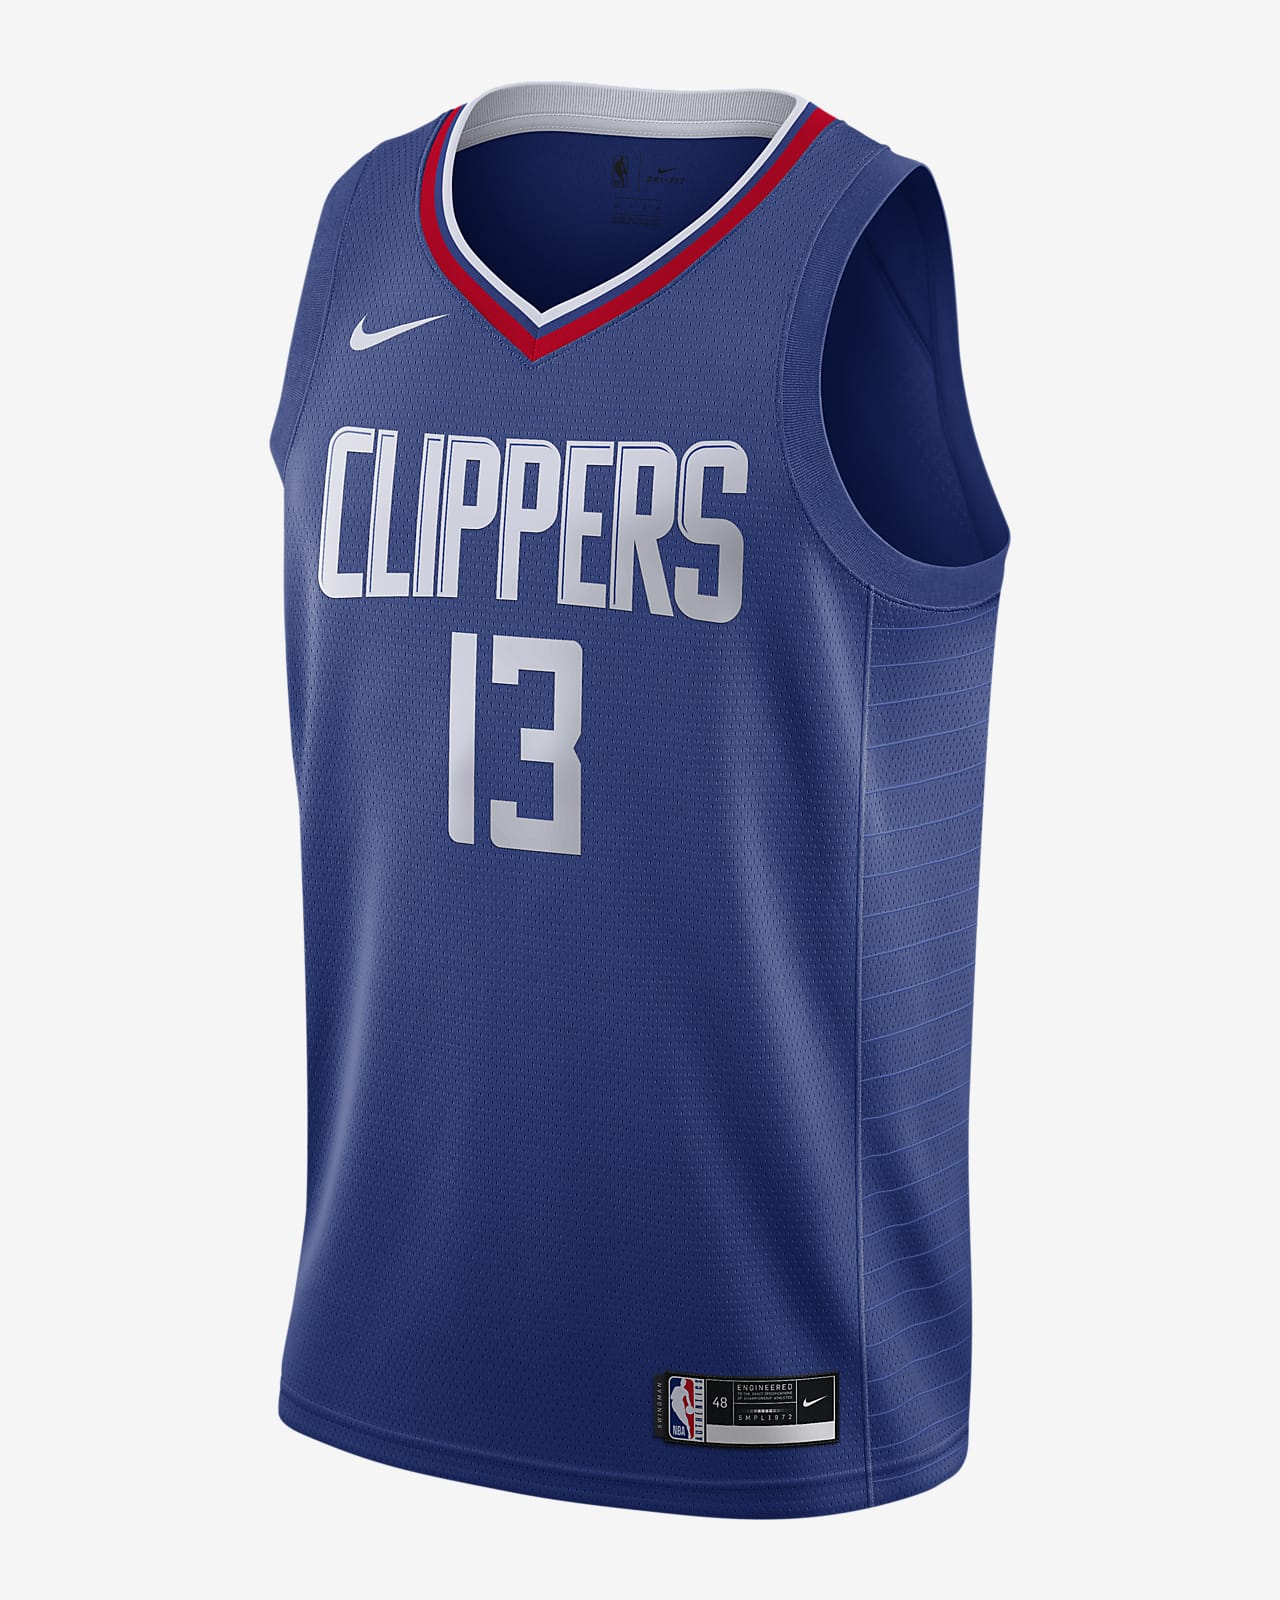 Camiseta Nike NBA Swingman Paul George Clippers Icon Edition 2020